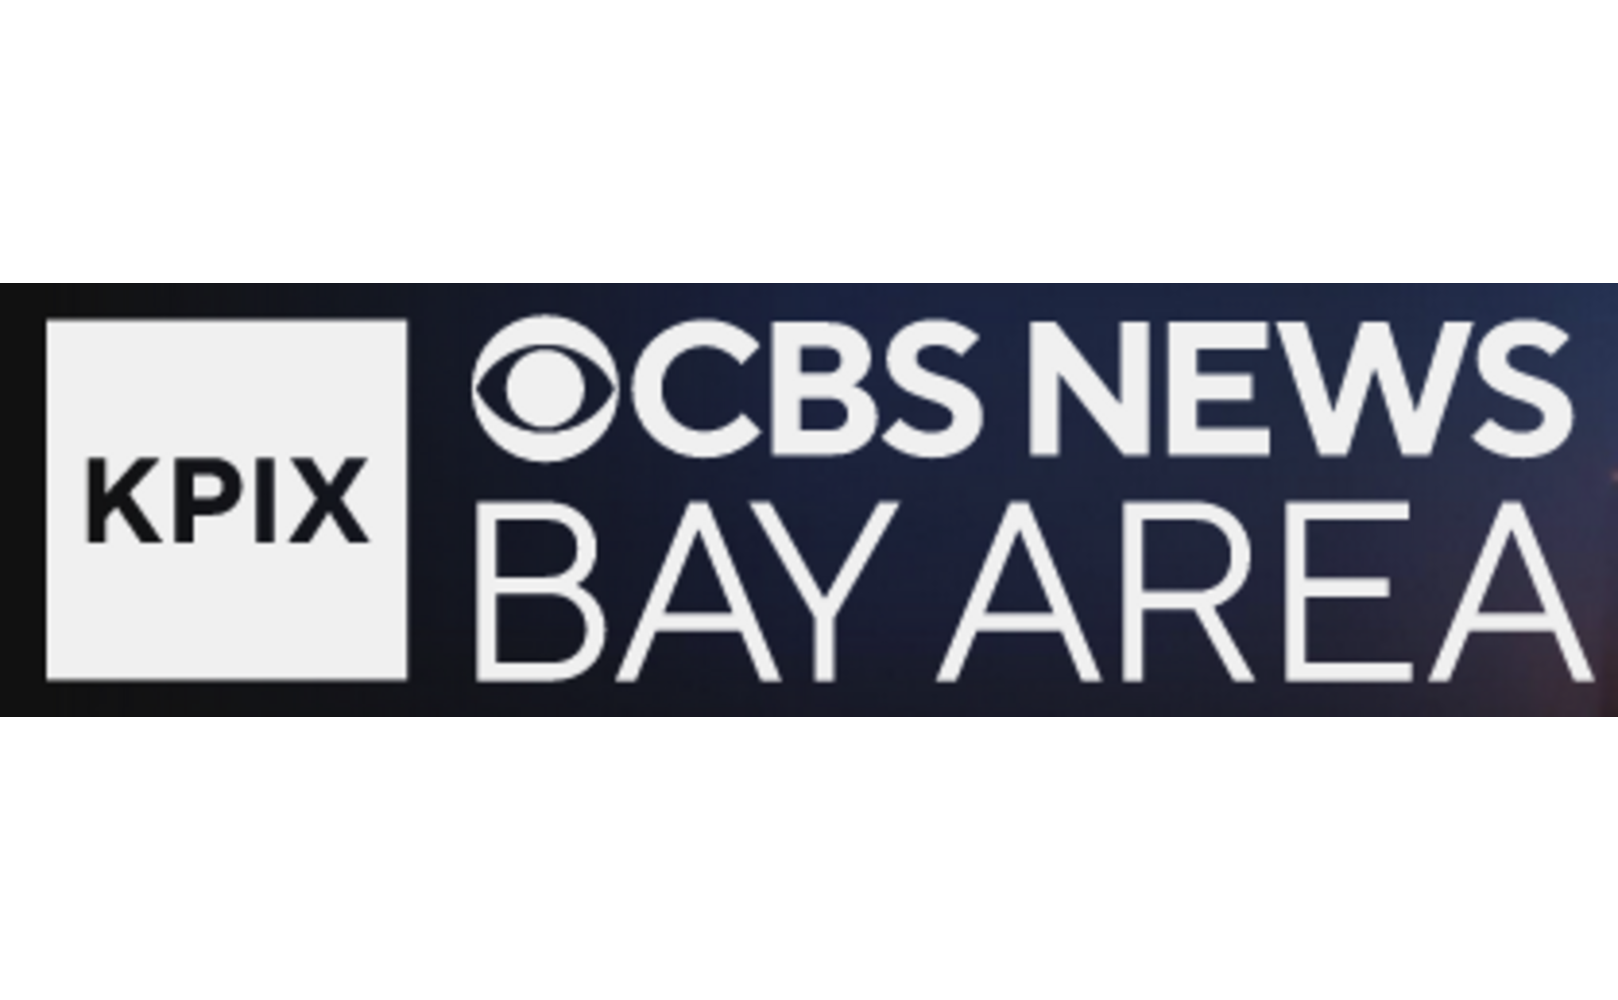 KPIX CBS News Bay Area